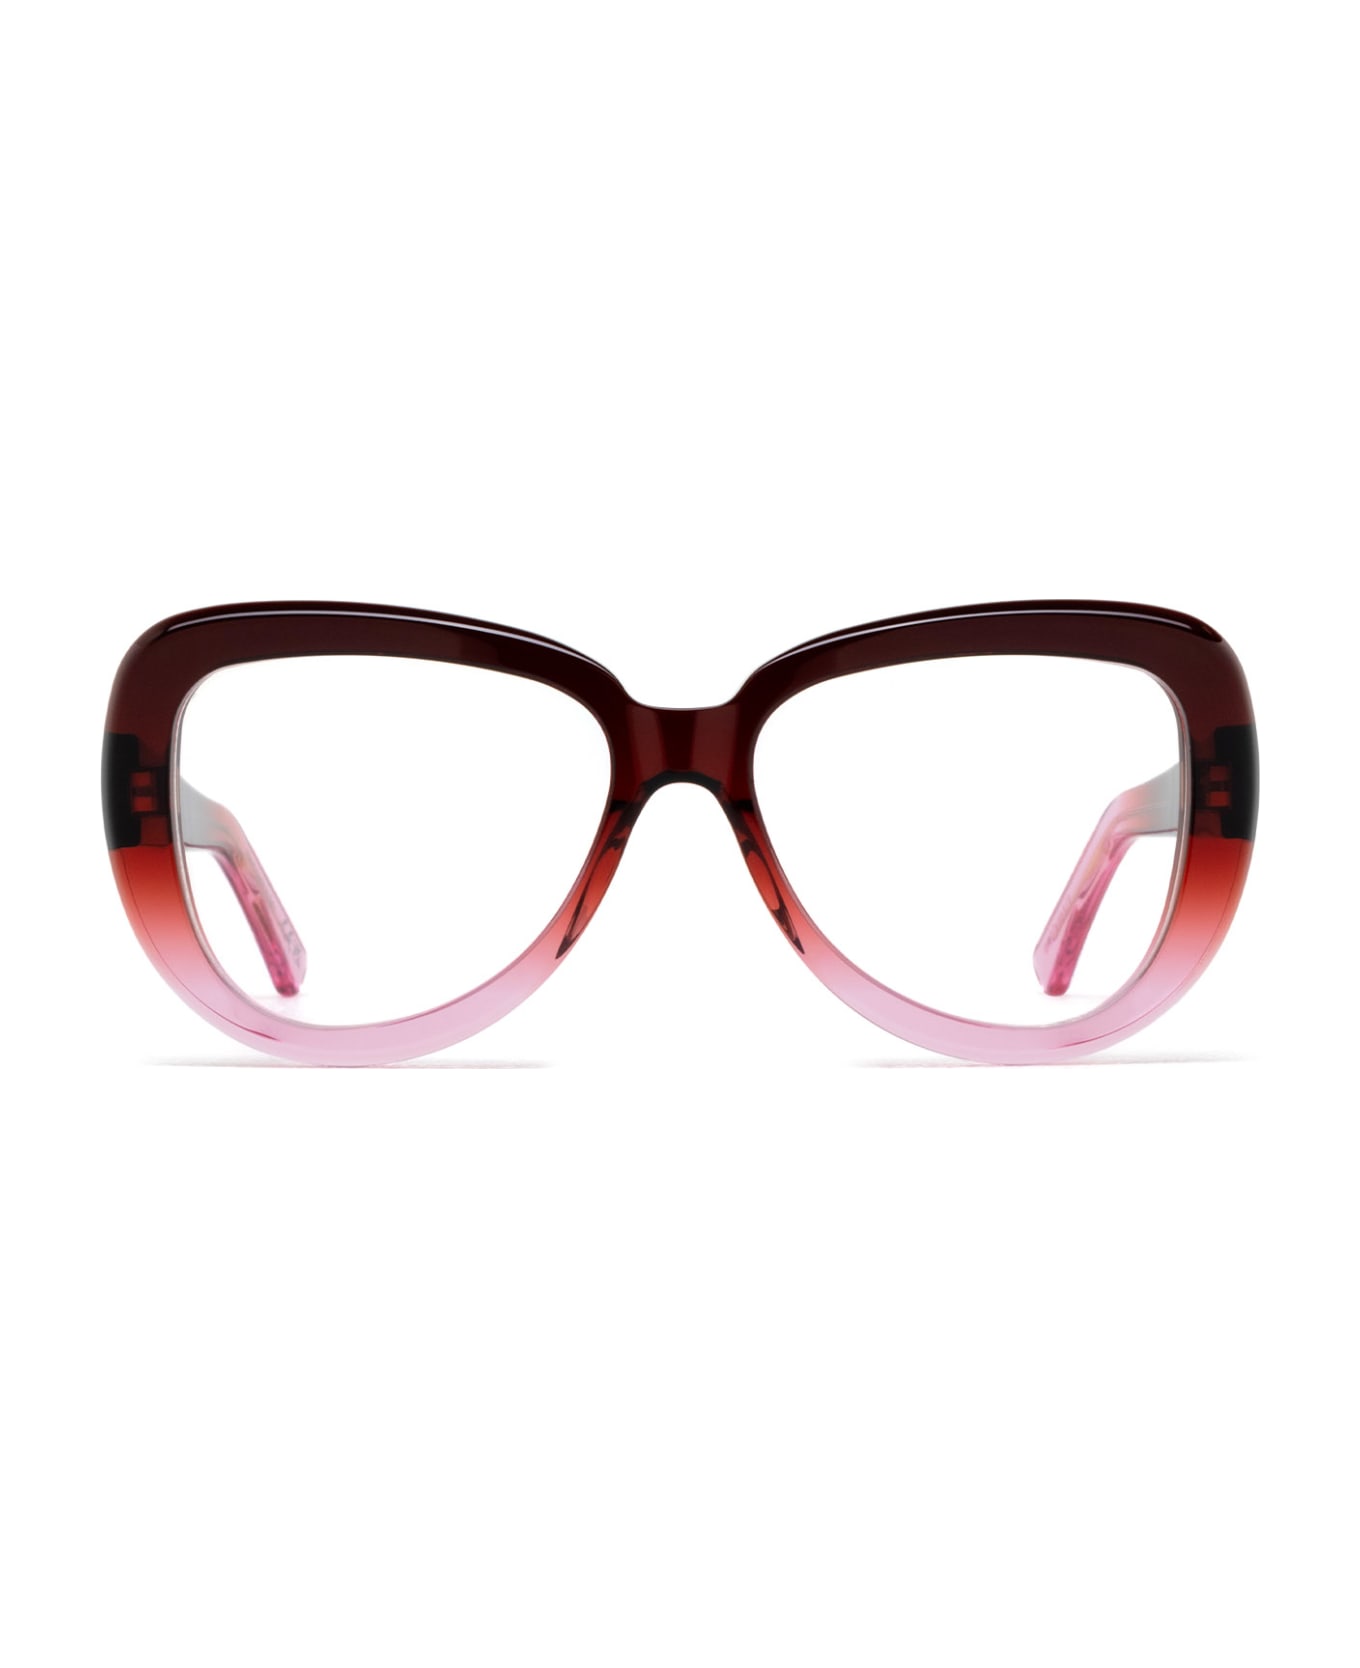 Marni Eyewear Elephant Island Opt Faded Burgundy Glasses - Faded Burgundy アイウェア